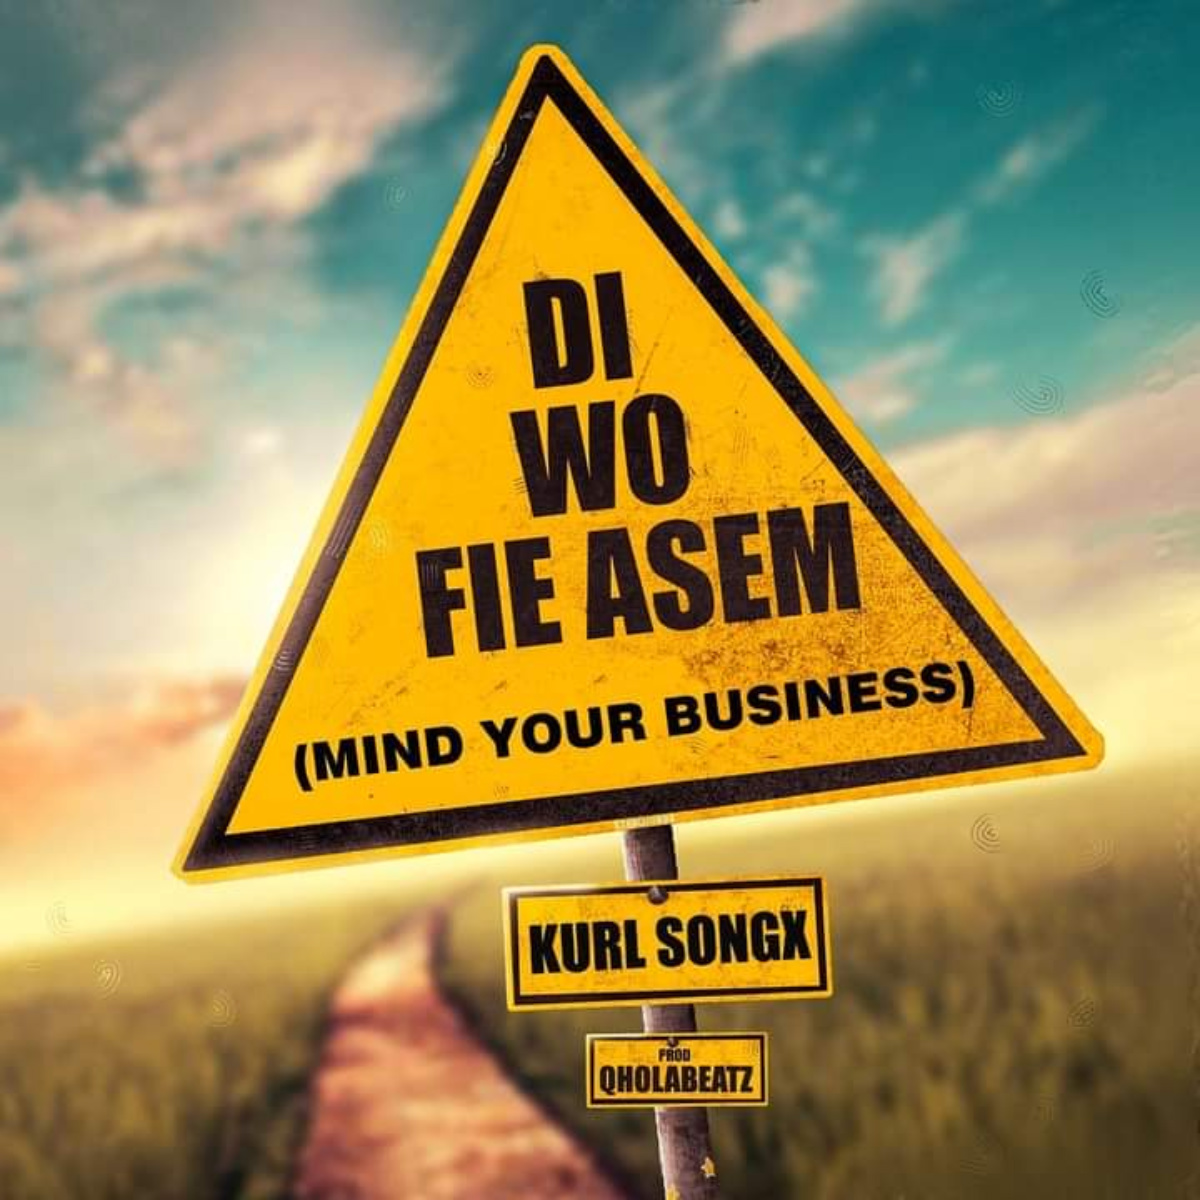 Kurl Songx – Di Wo Fie Asem 